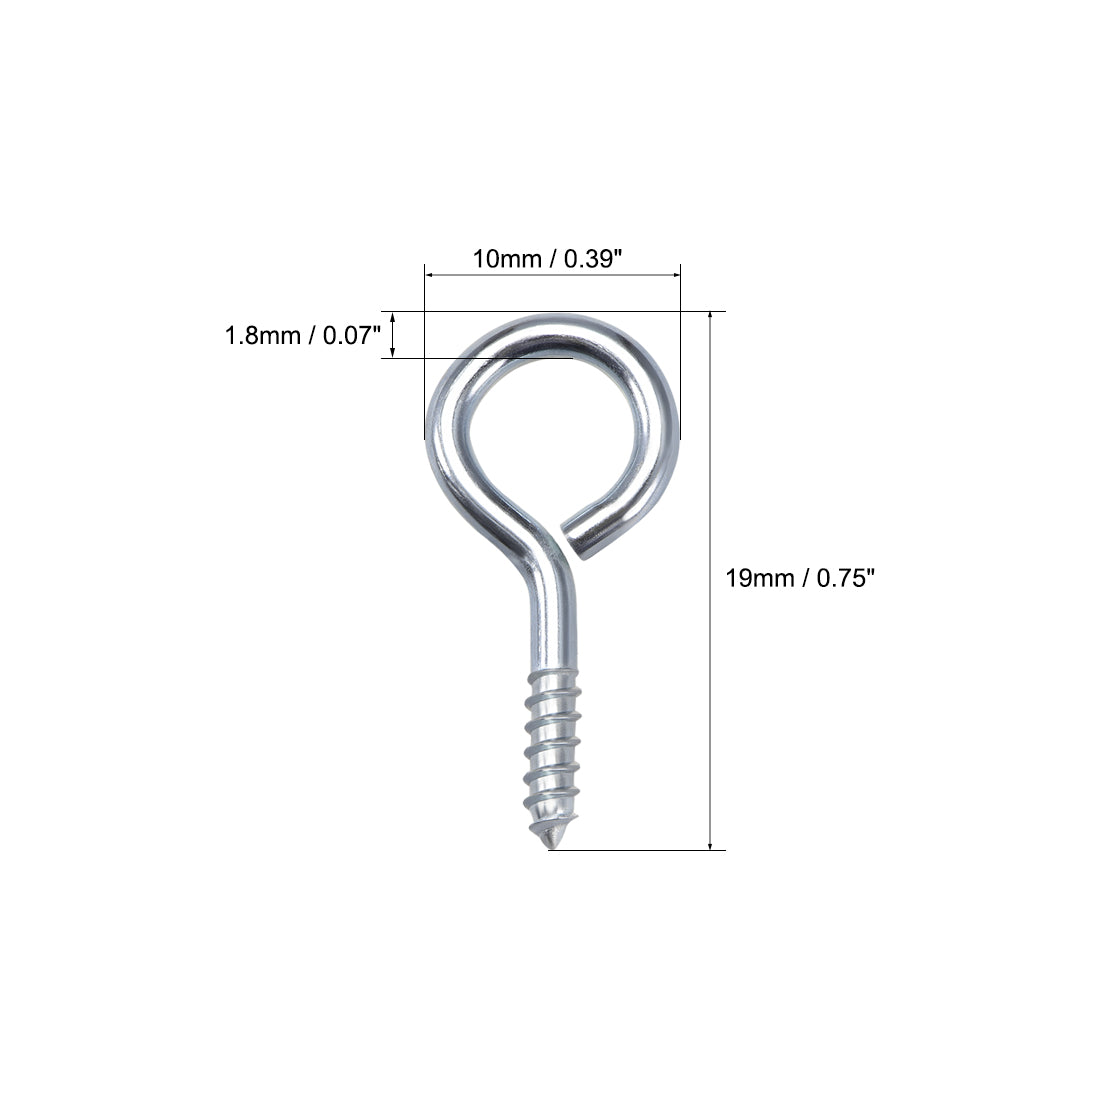 uxcell Uxcell 0.75" Small Screw Eye Hooks Self Tapping Screws Carbon Steel Screw-in Hanger Eye-Shape Ring Hooks Sliver 50pcs